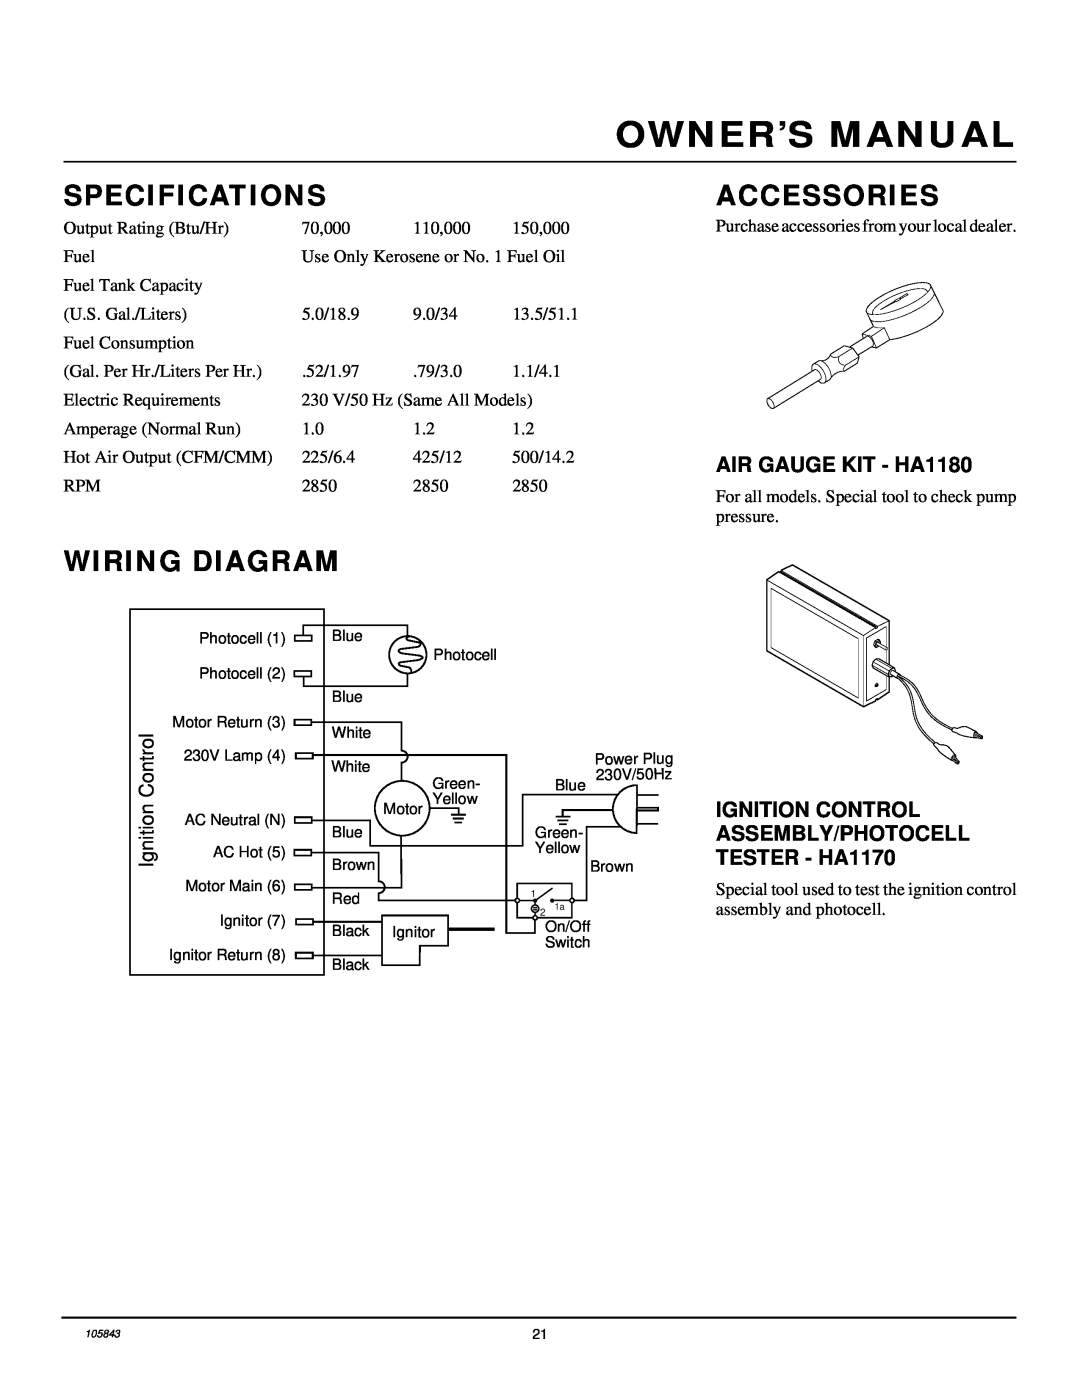 Desa D20N, D44N, D30N owner manual Specifications, Accessories, Wiring Diagram, AIR GAUGE KIT - HA1180, Ignition Control 